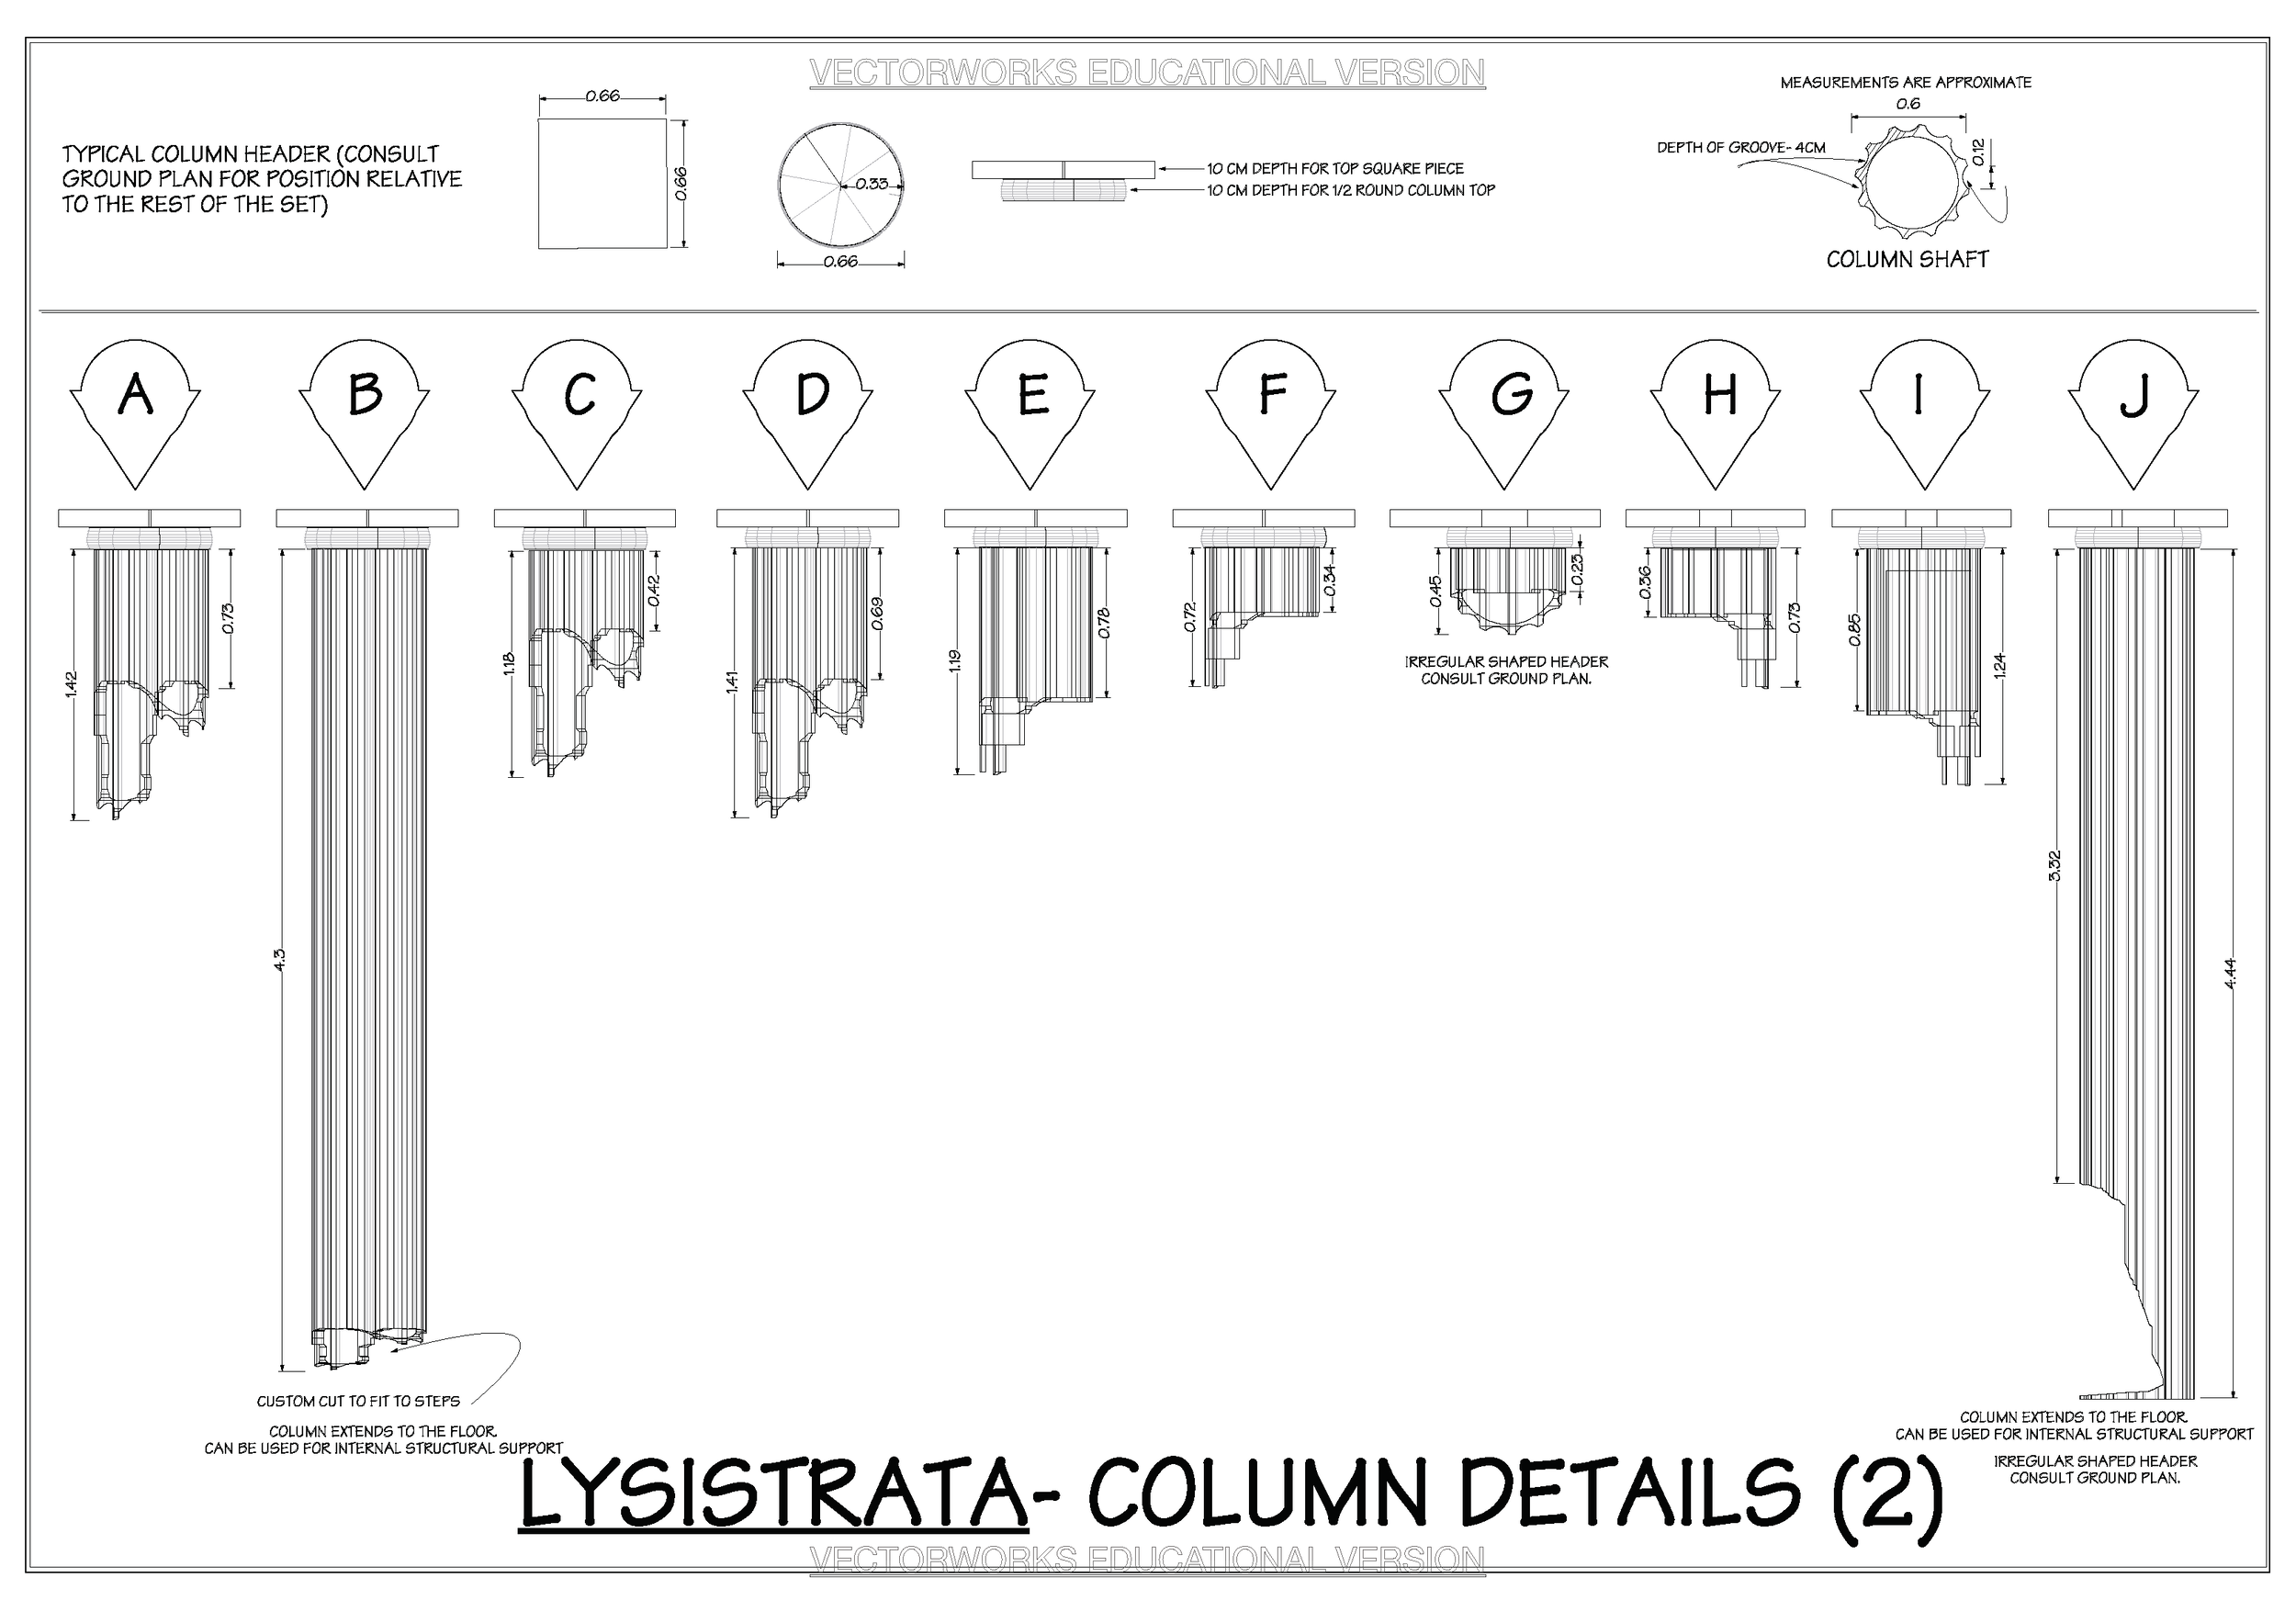 Lysistrata- Column details